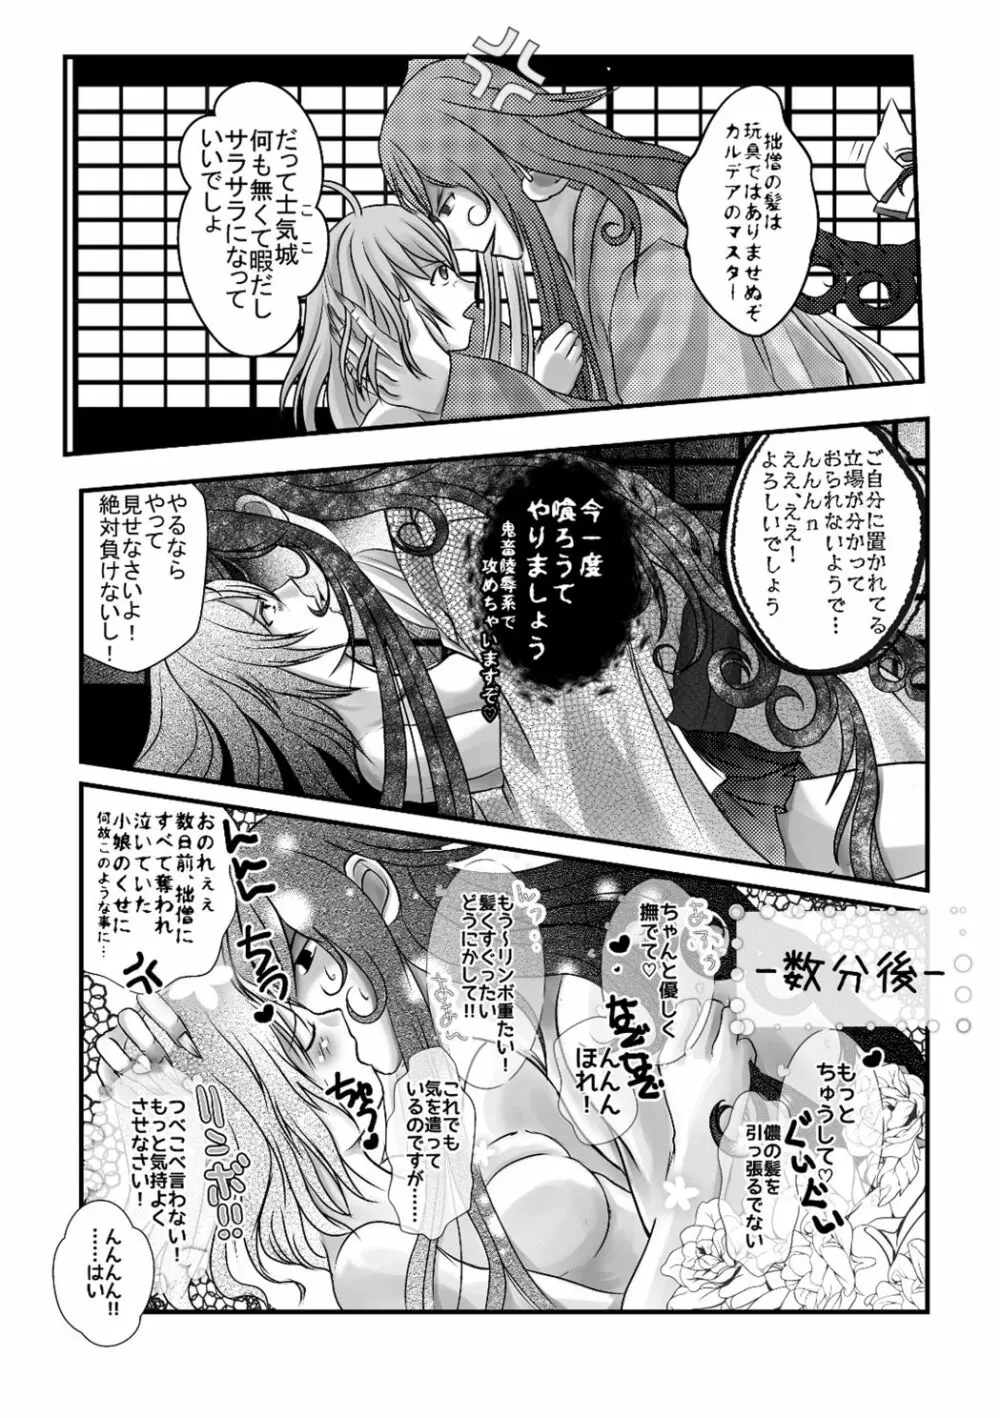 ] Rin guda ♀ rakugaki guda yuru manga(Fate/Grand Order] 9ページ